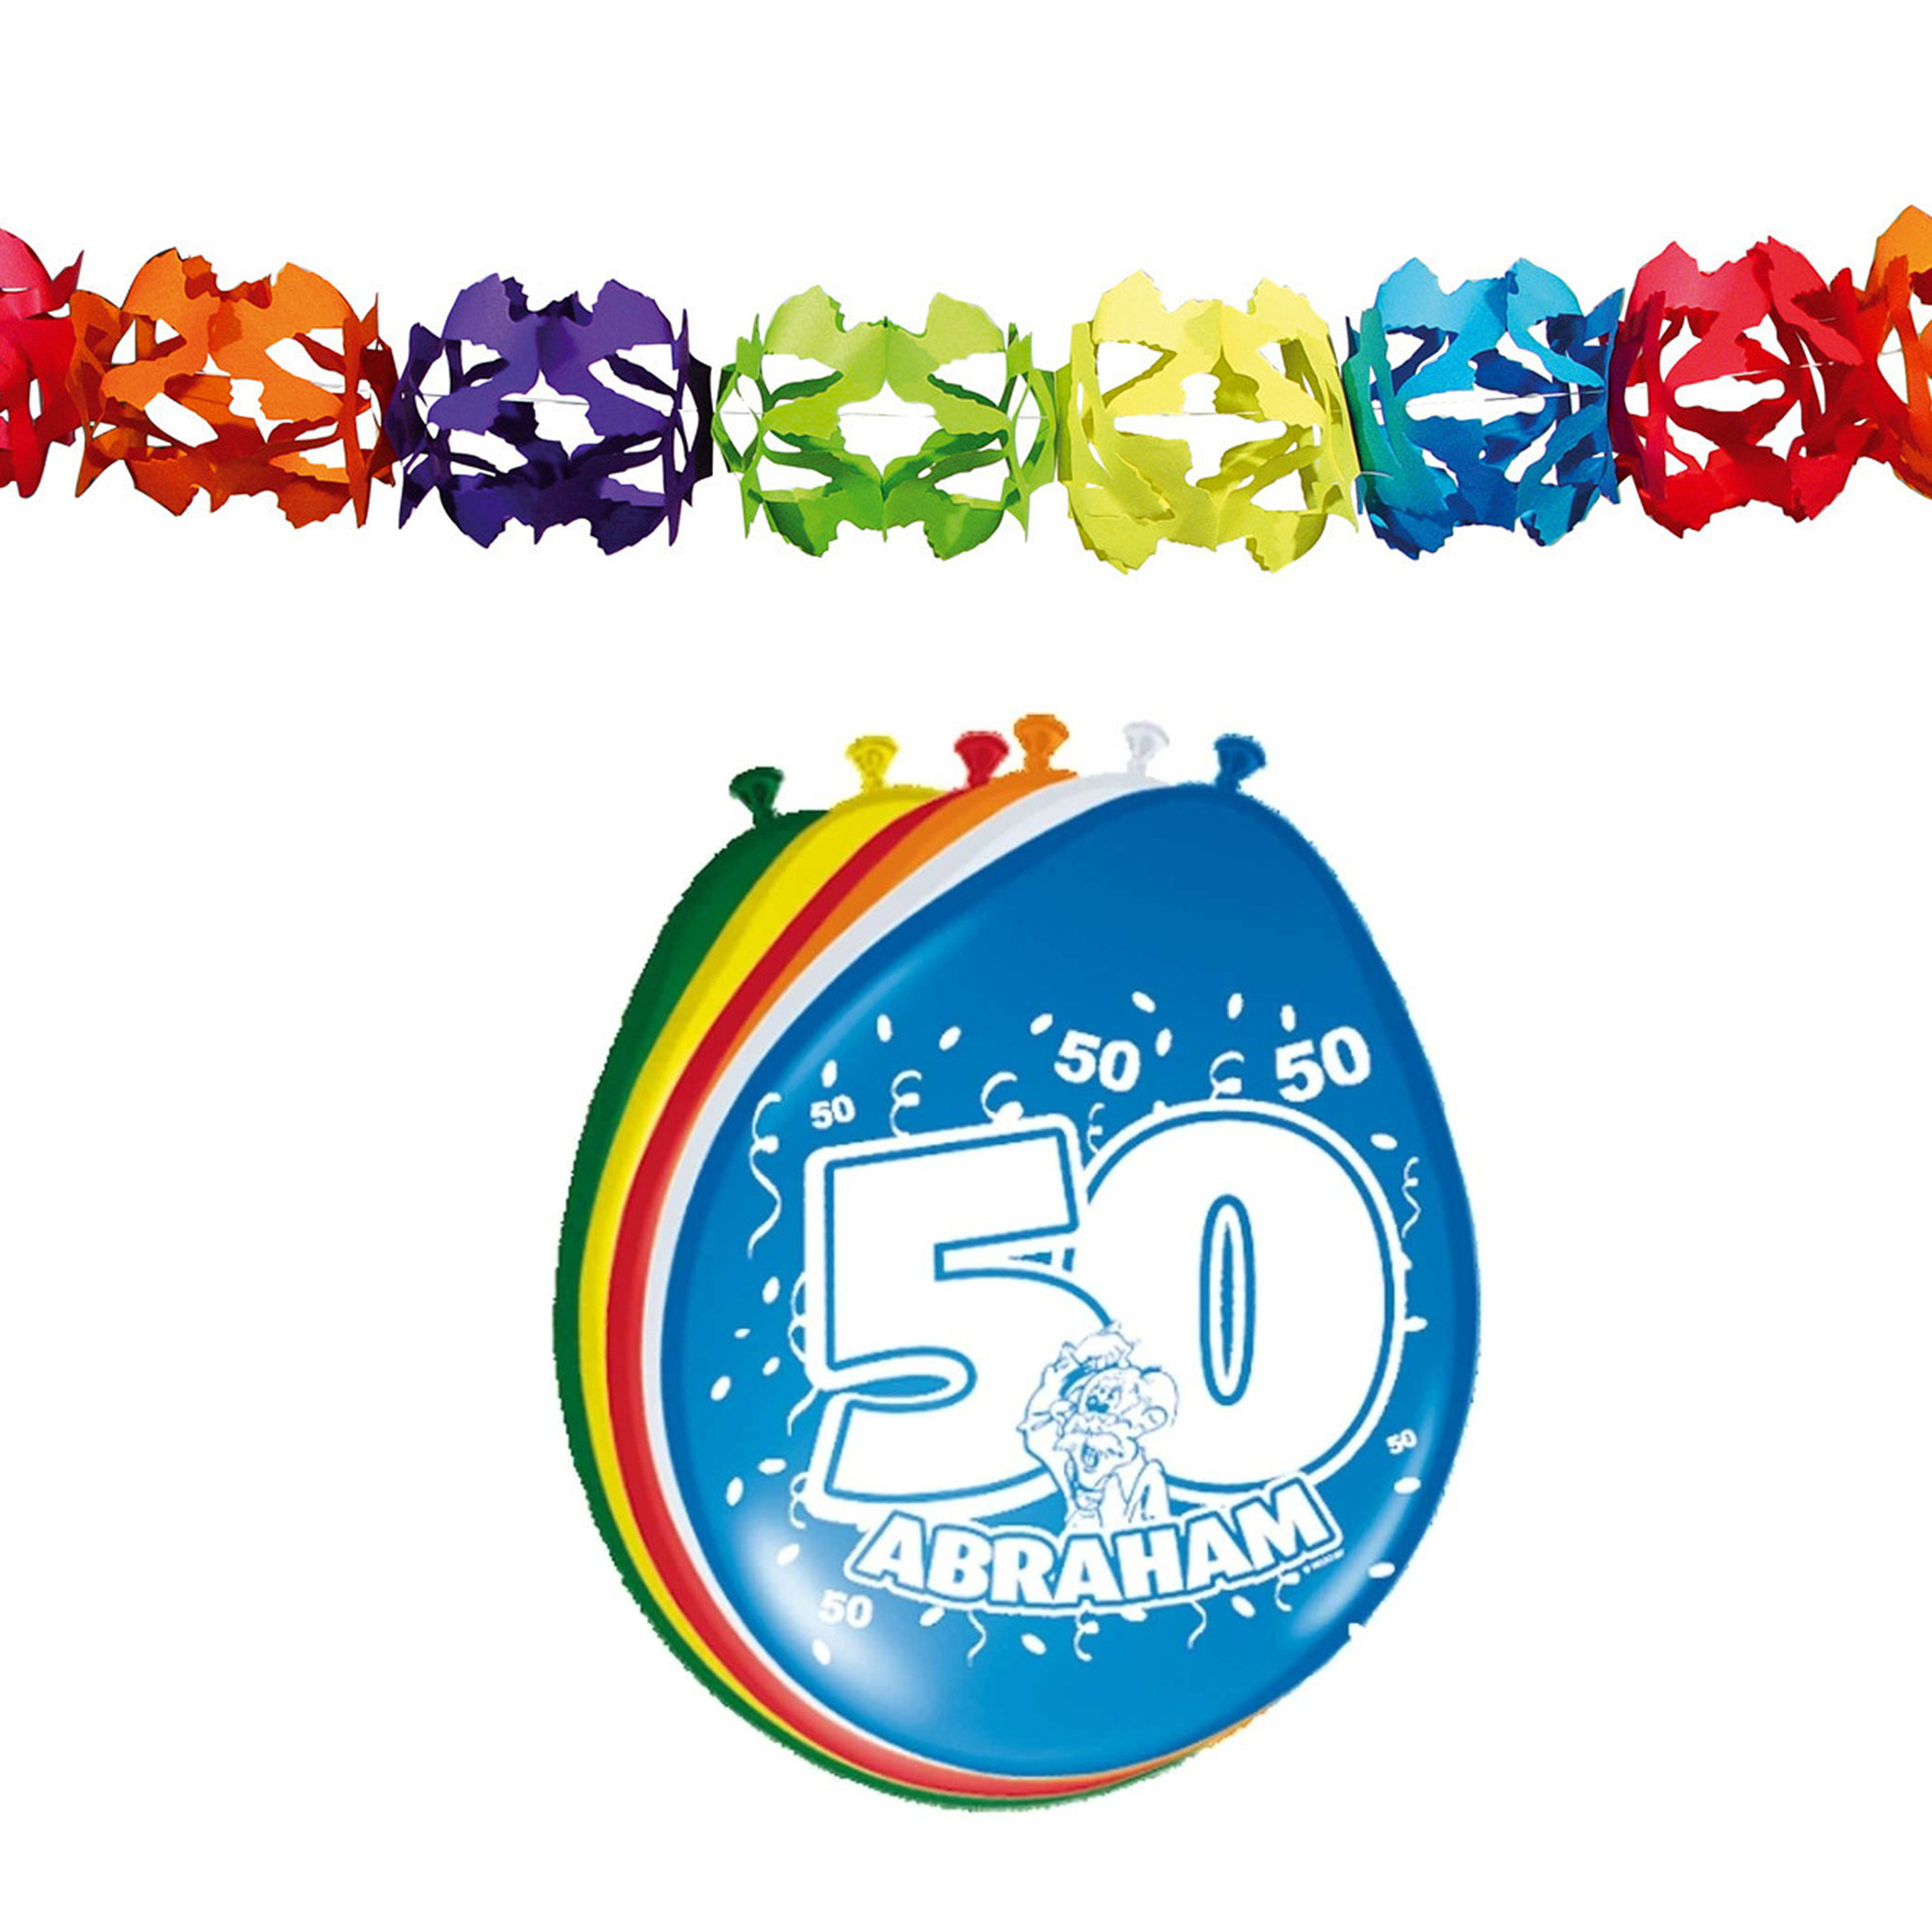 Folat Party 50e jaar Abraham verjaardag feestversiering set Ballonnen en slingers